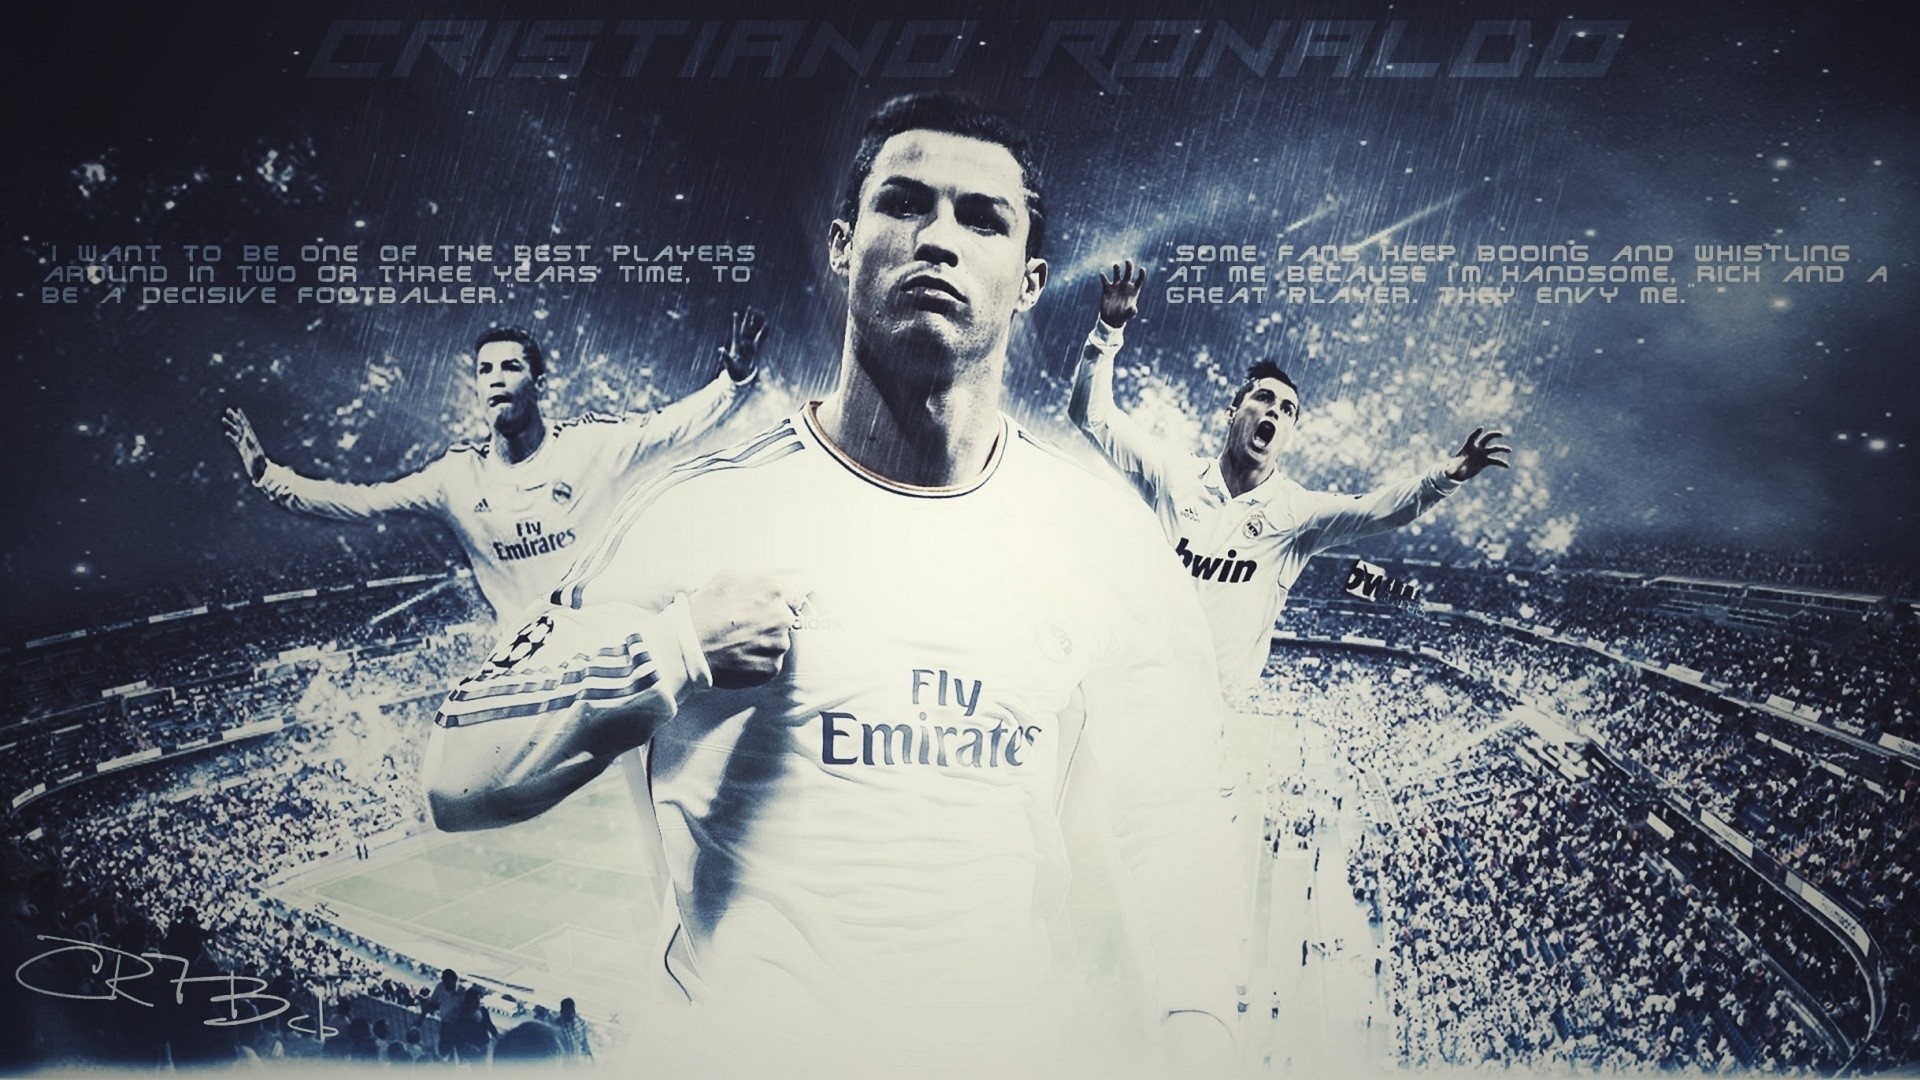 Cristiano Ronaldo Wallpaper Nike Image